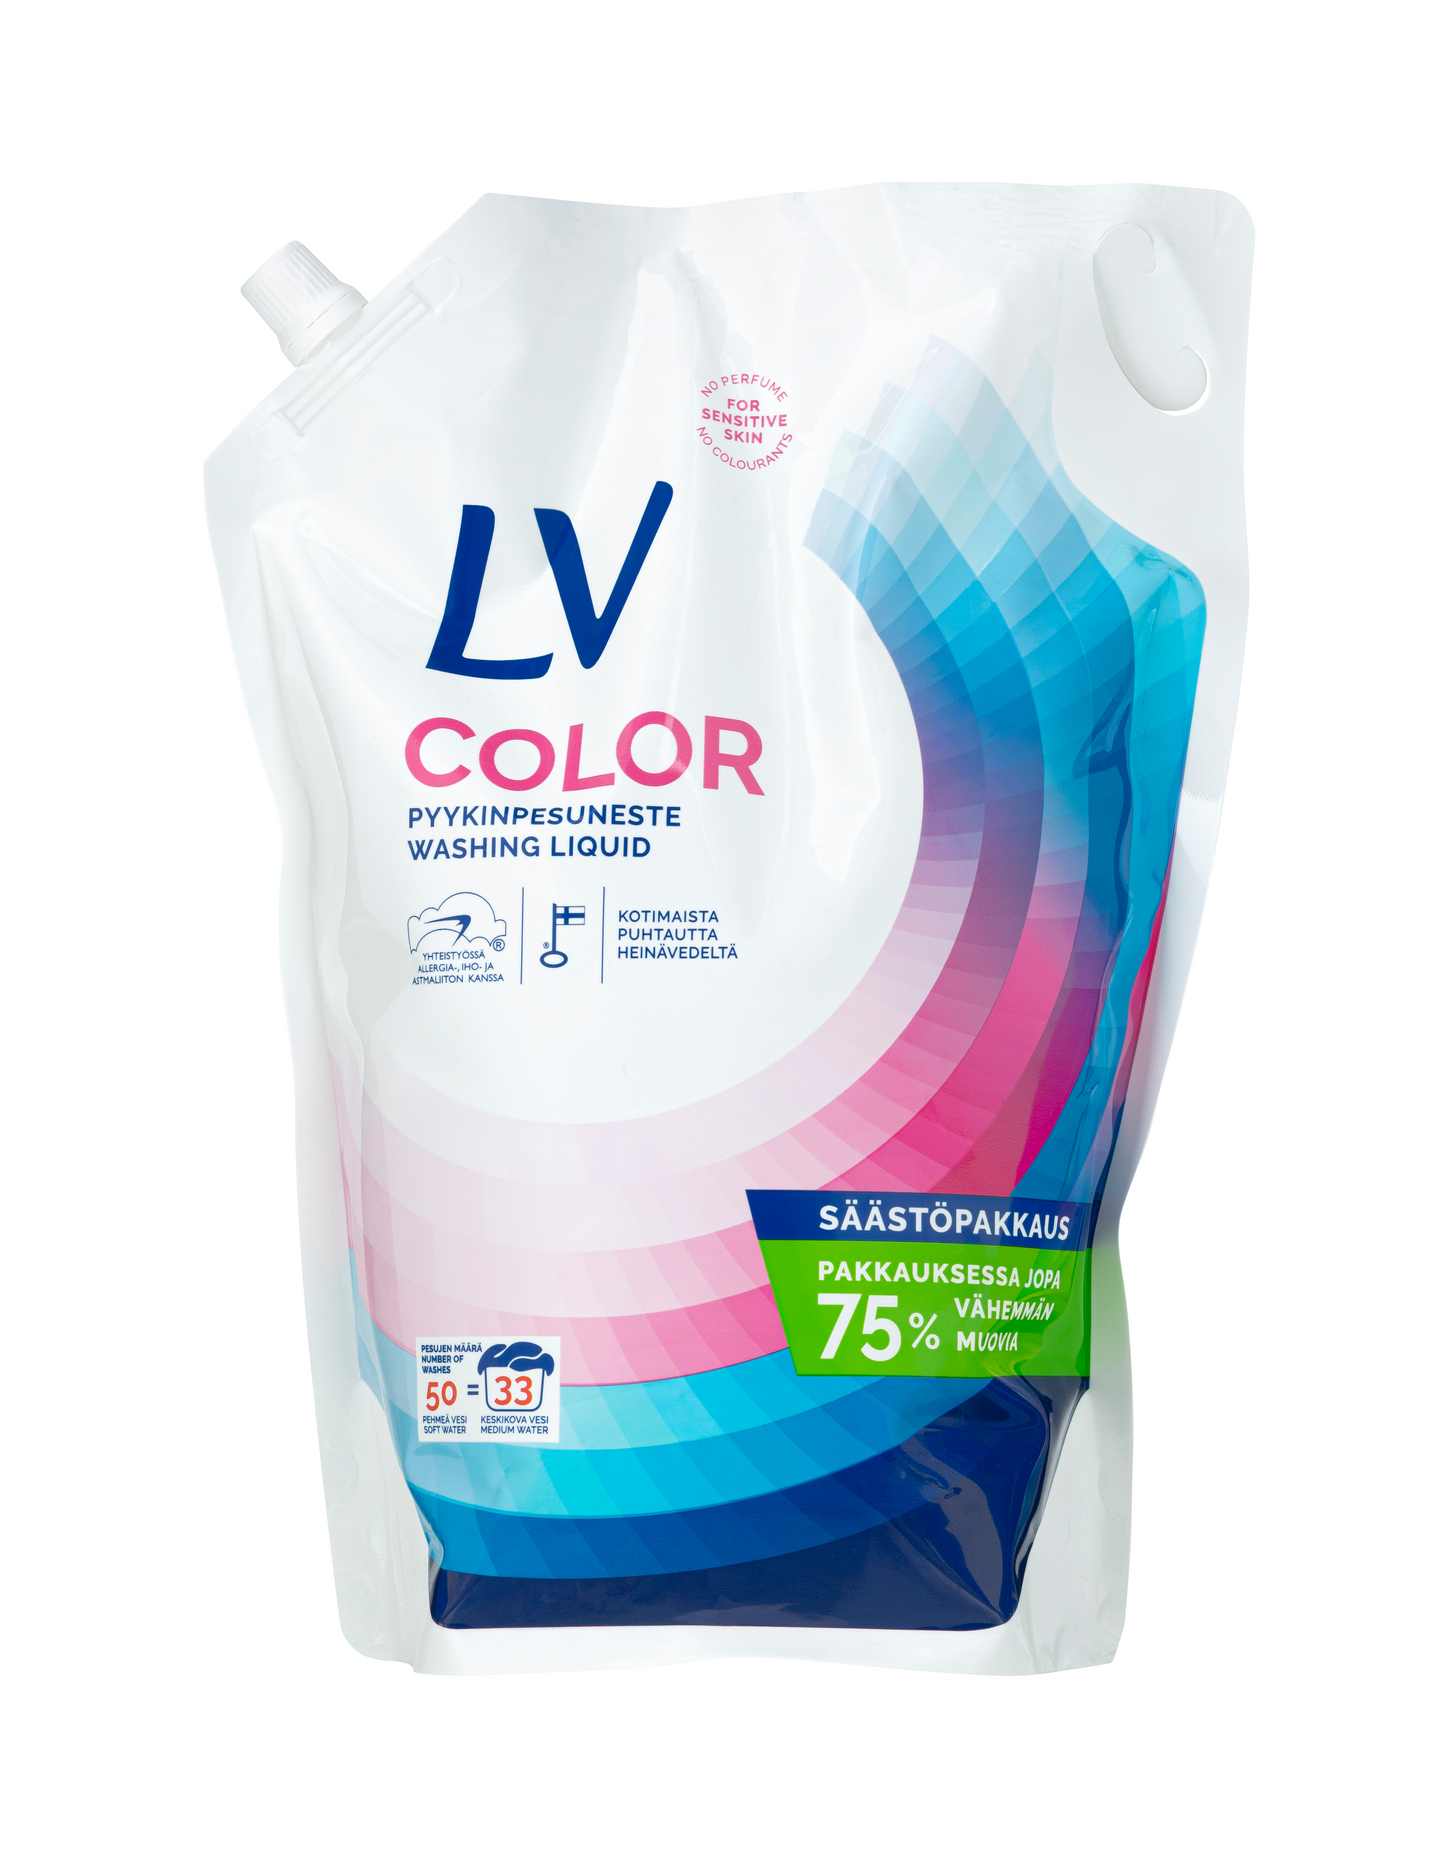 LV Color pyykinpesuneste 2,5l säästöpakkaus